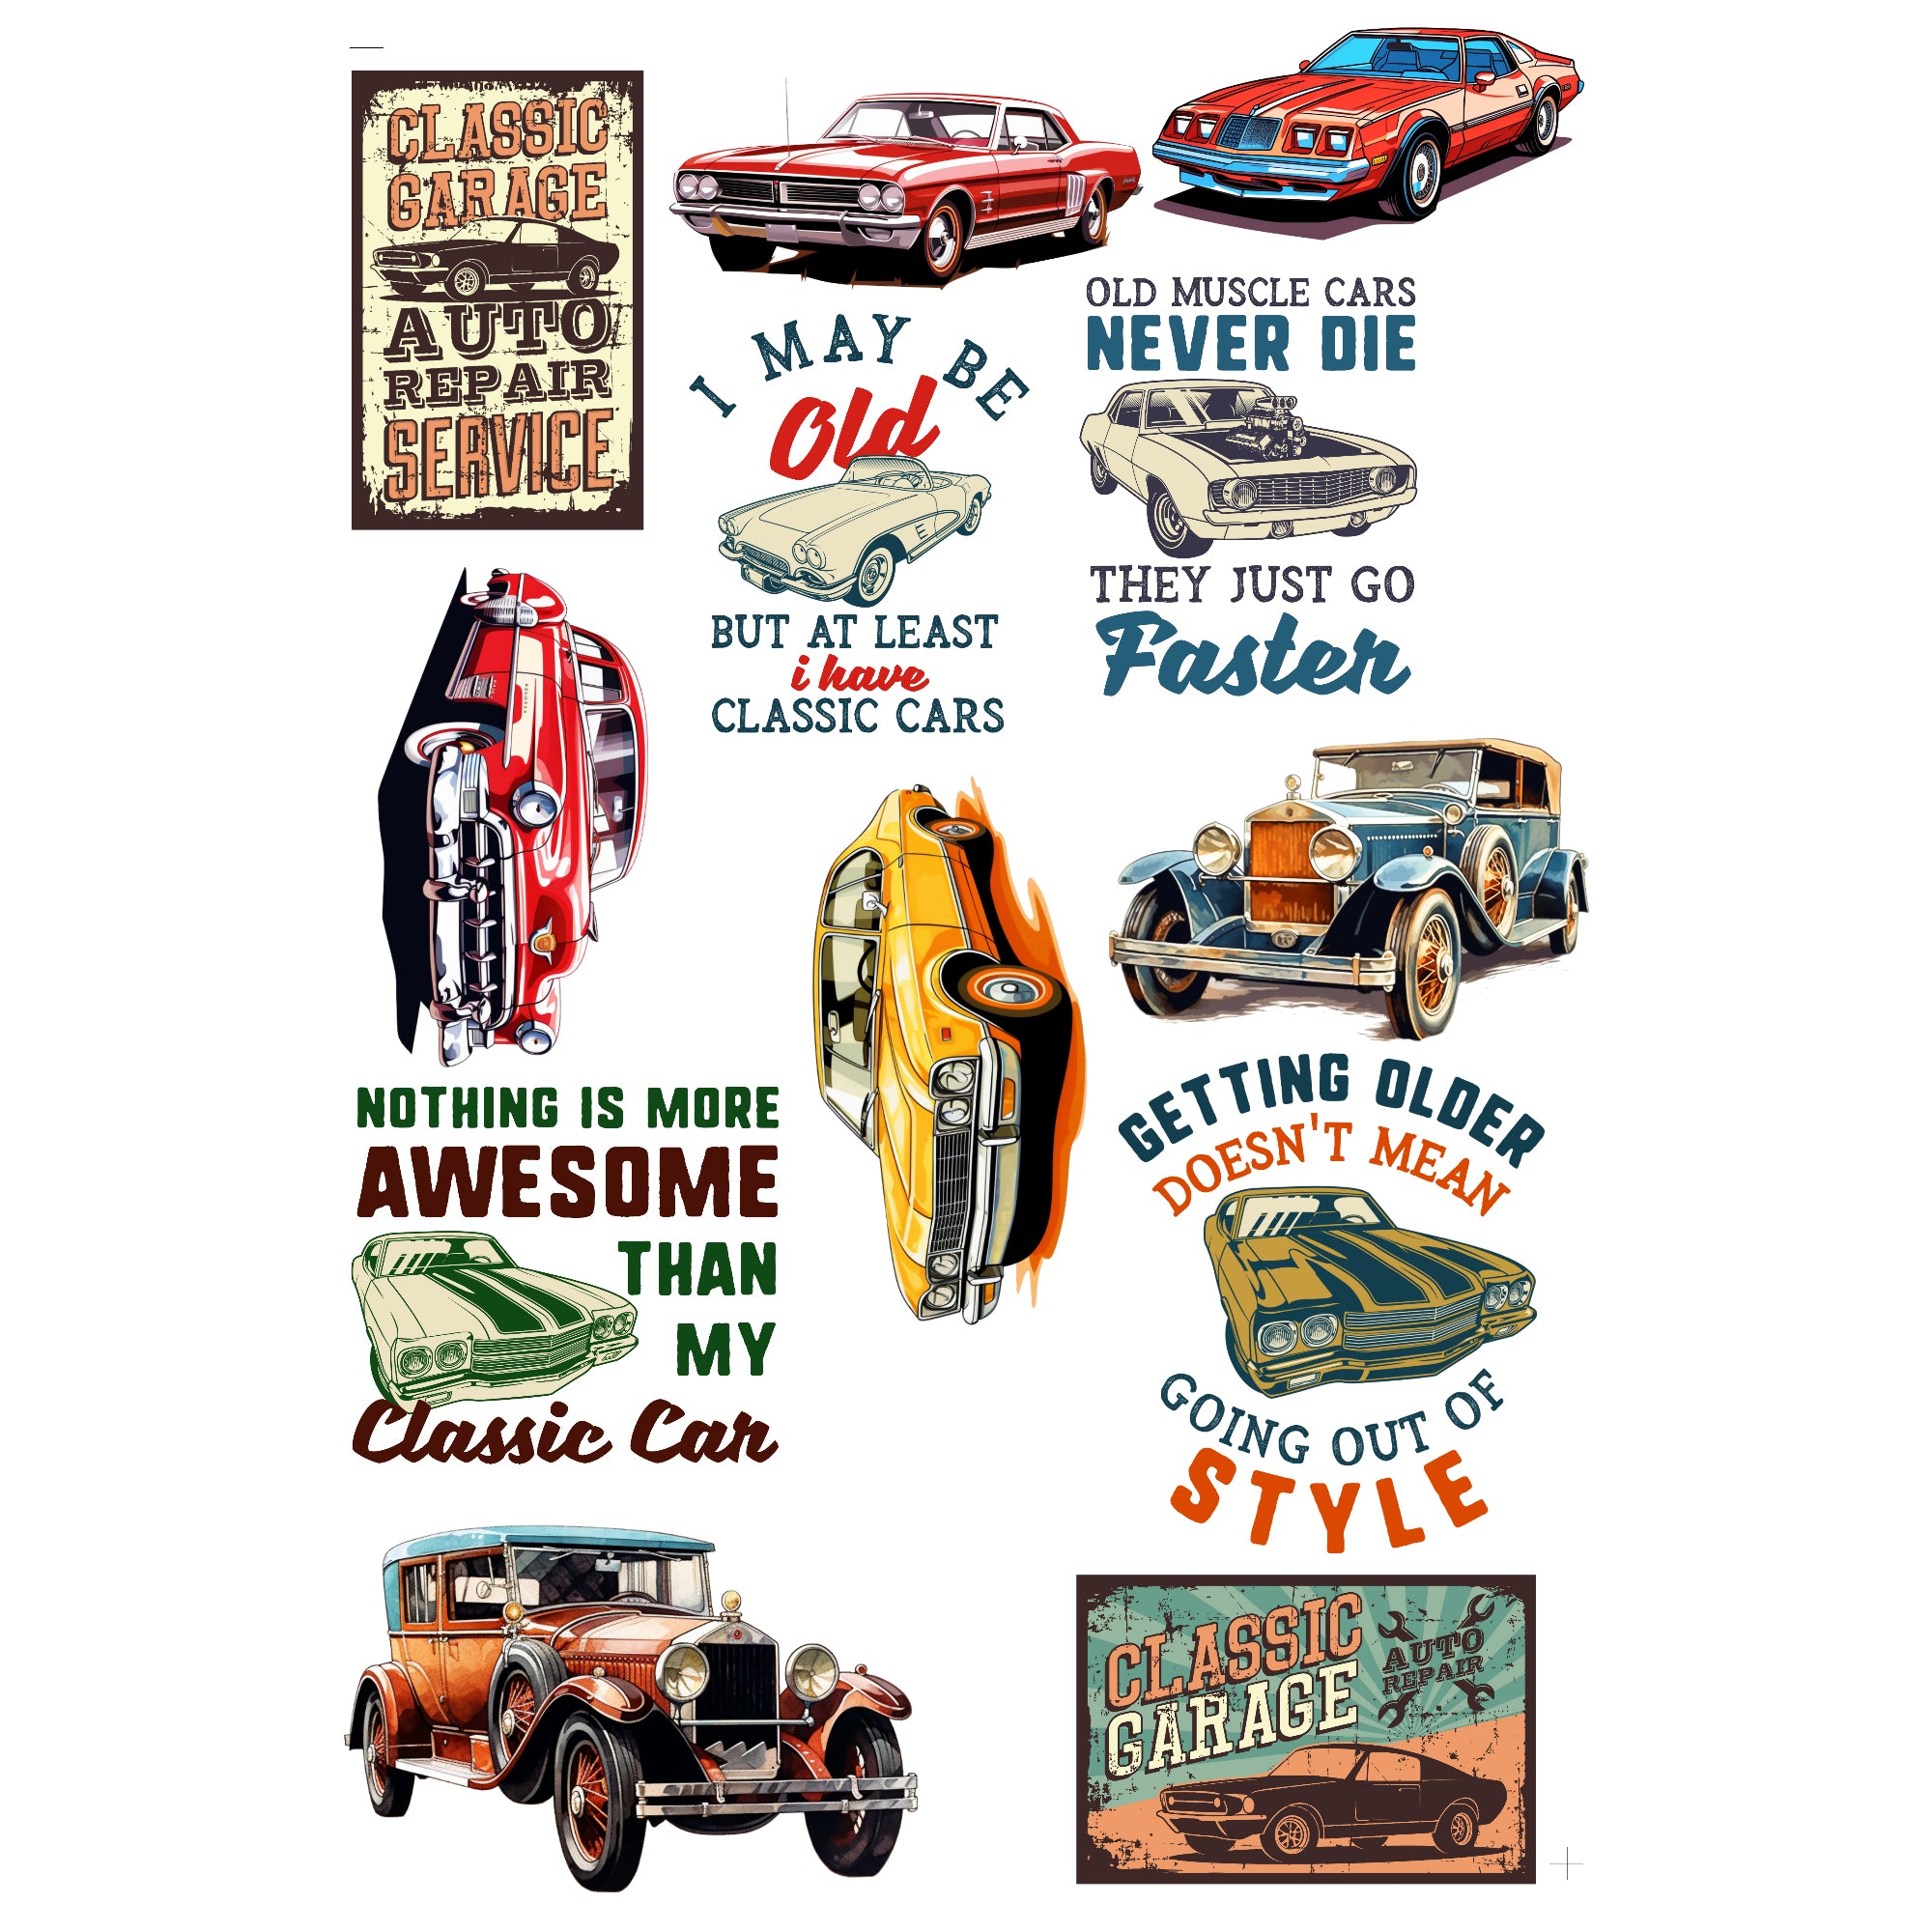 Classic Cars 12 x 12 Scrapbook Paper & Embellishment Kit by SSC Designs